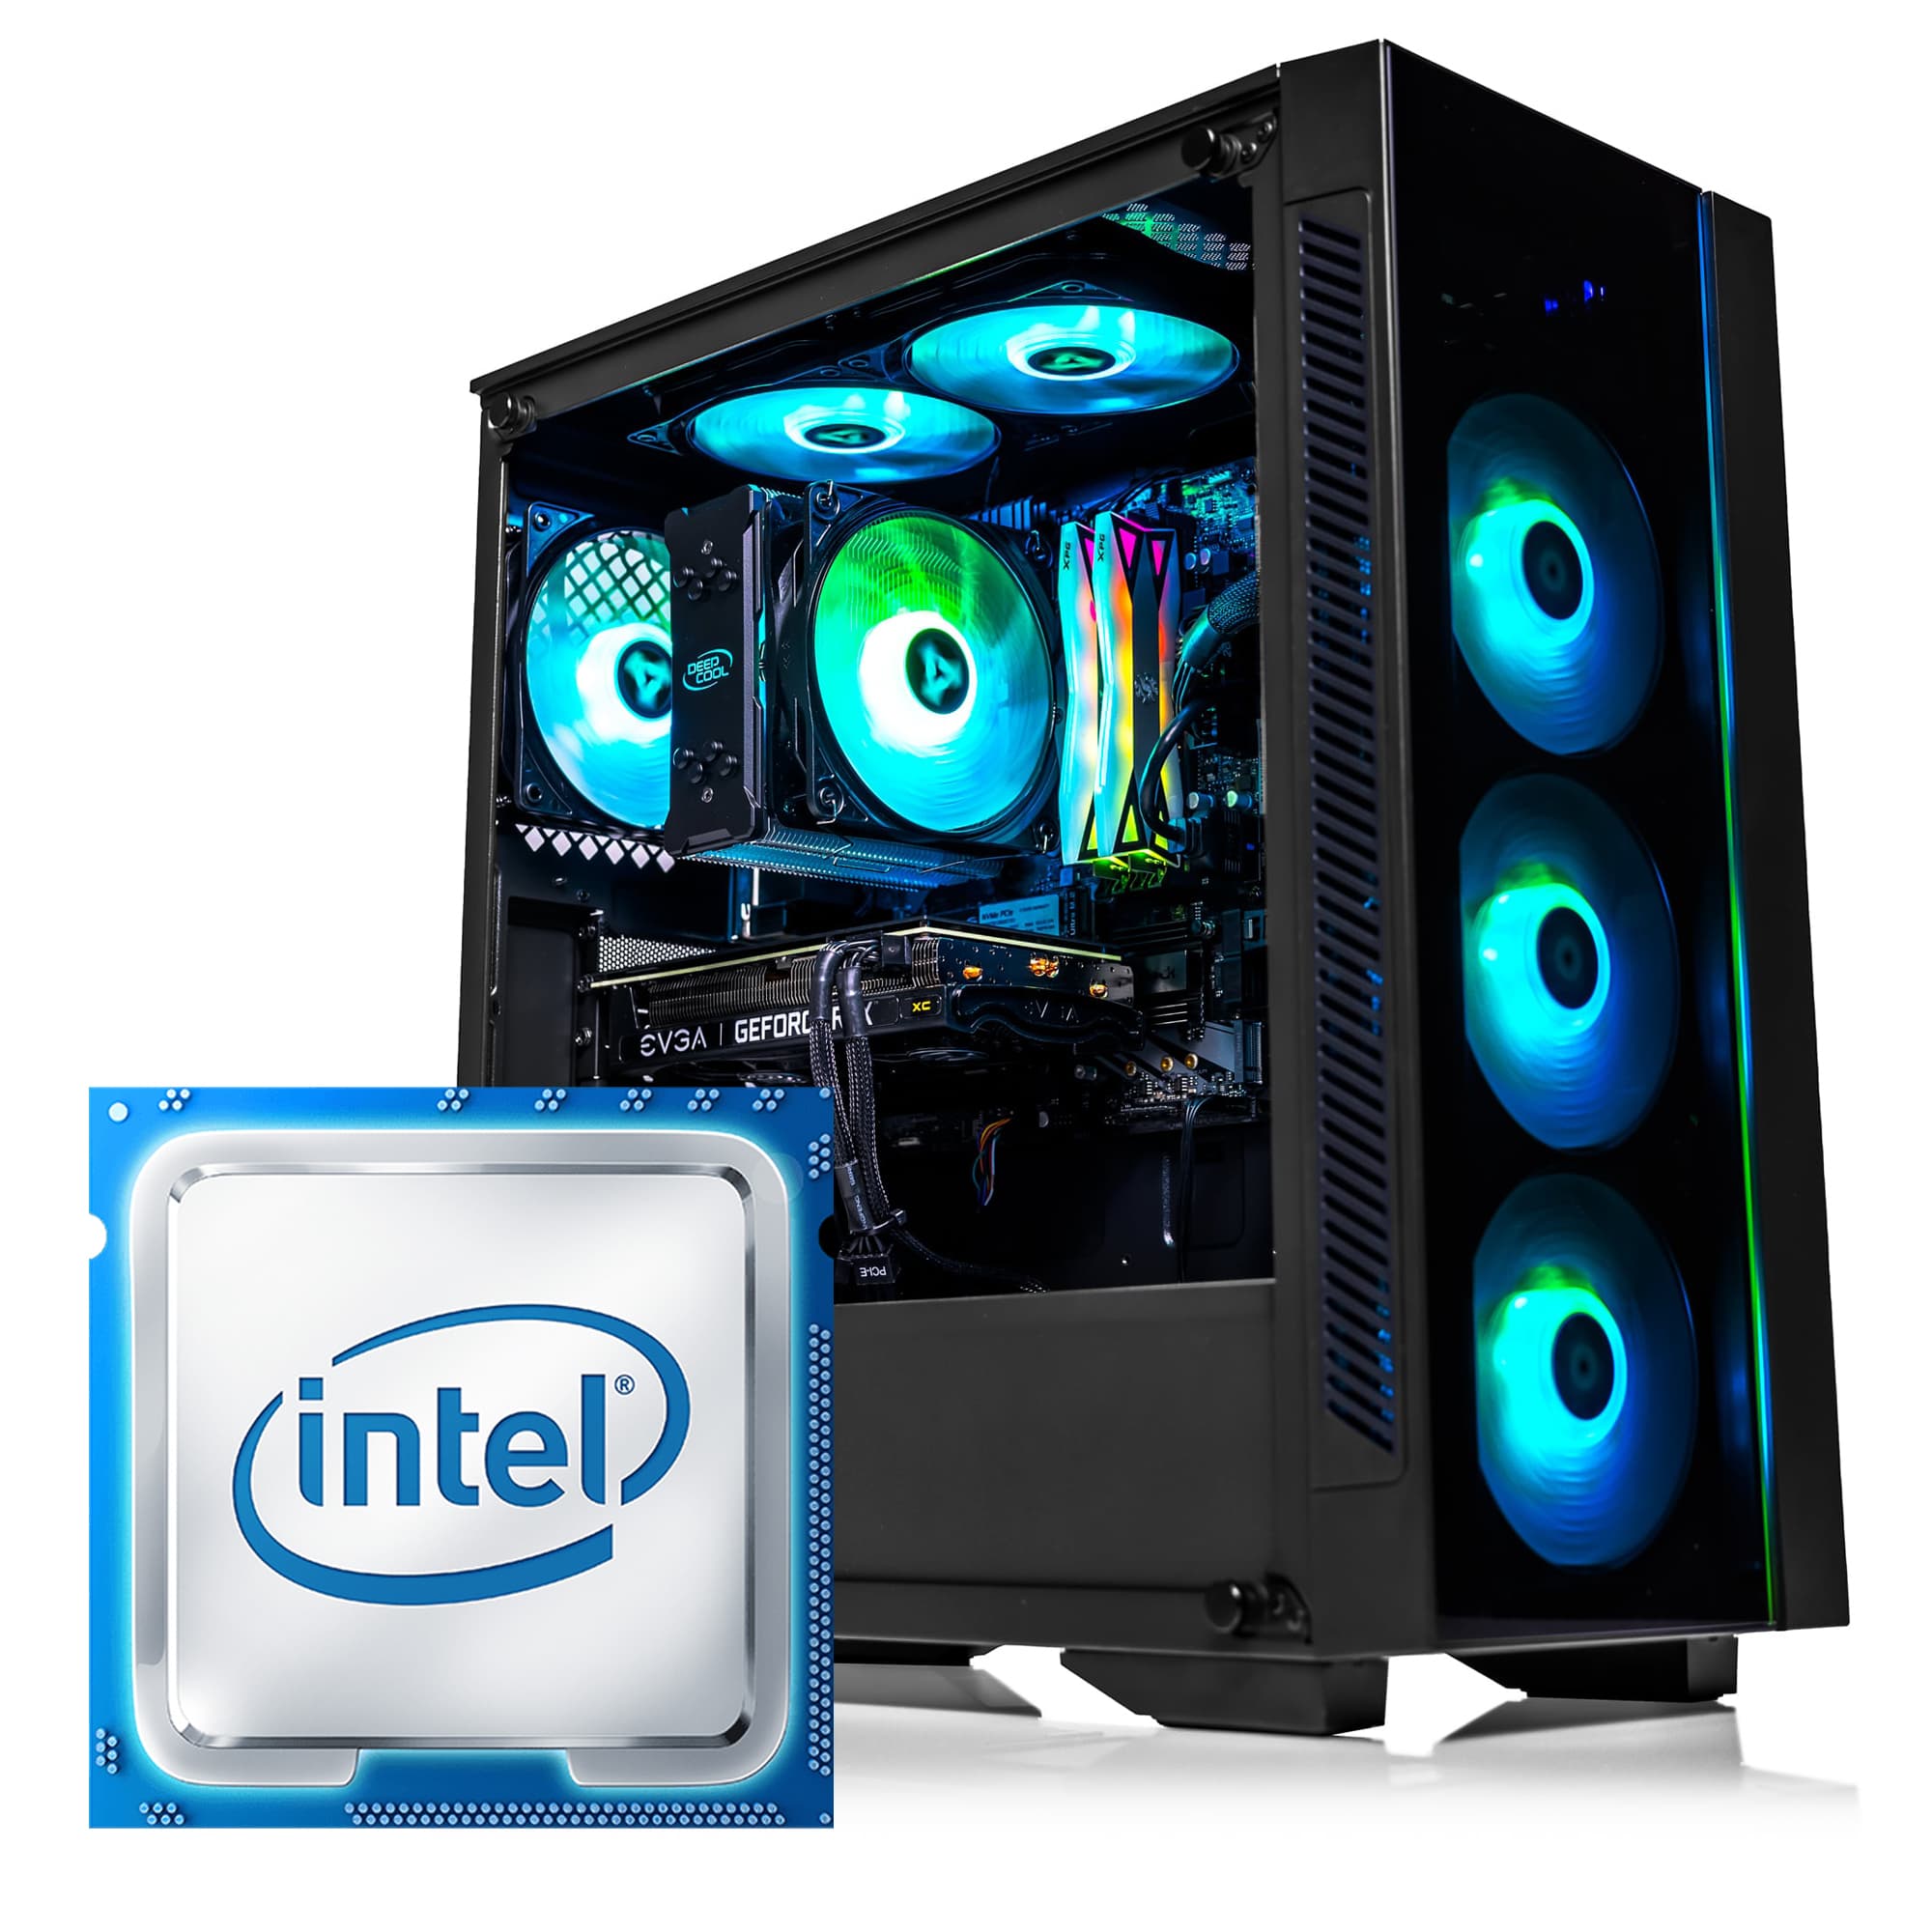 Intel Pc Image 2 